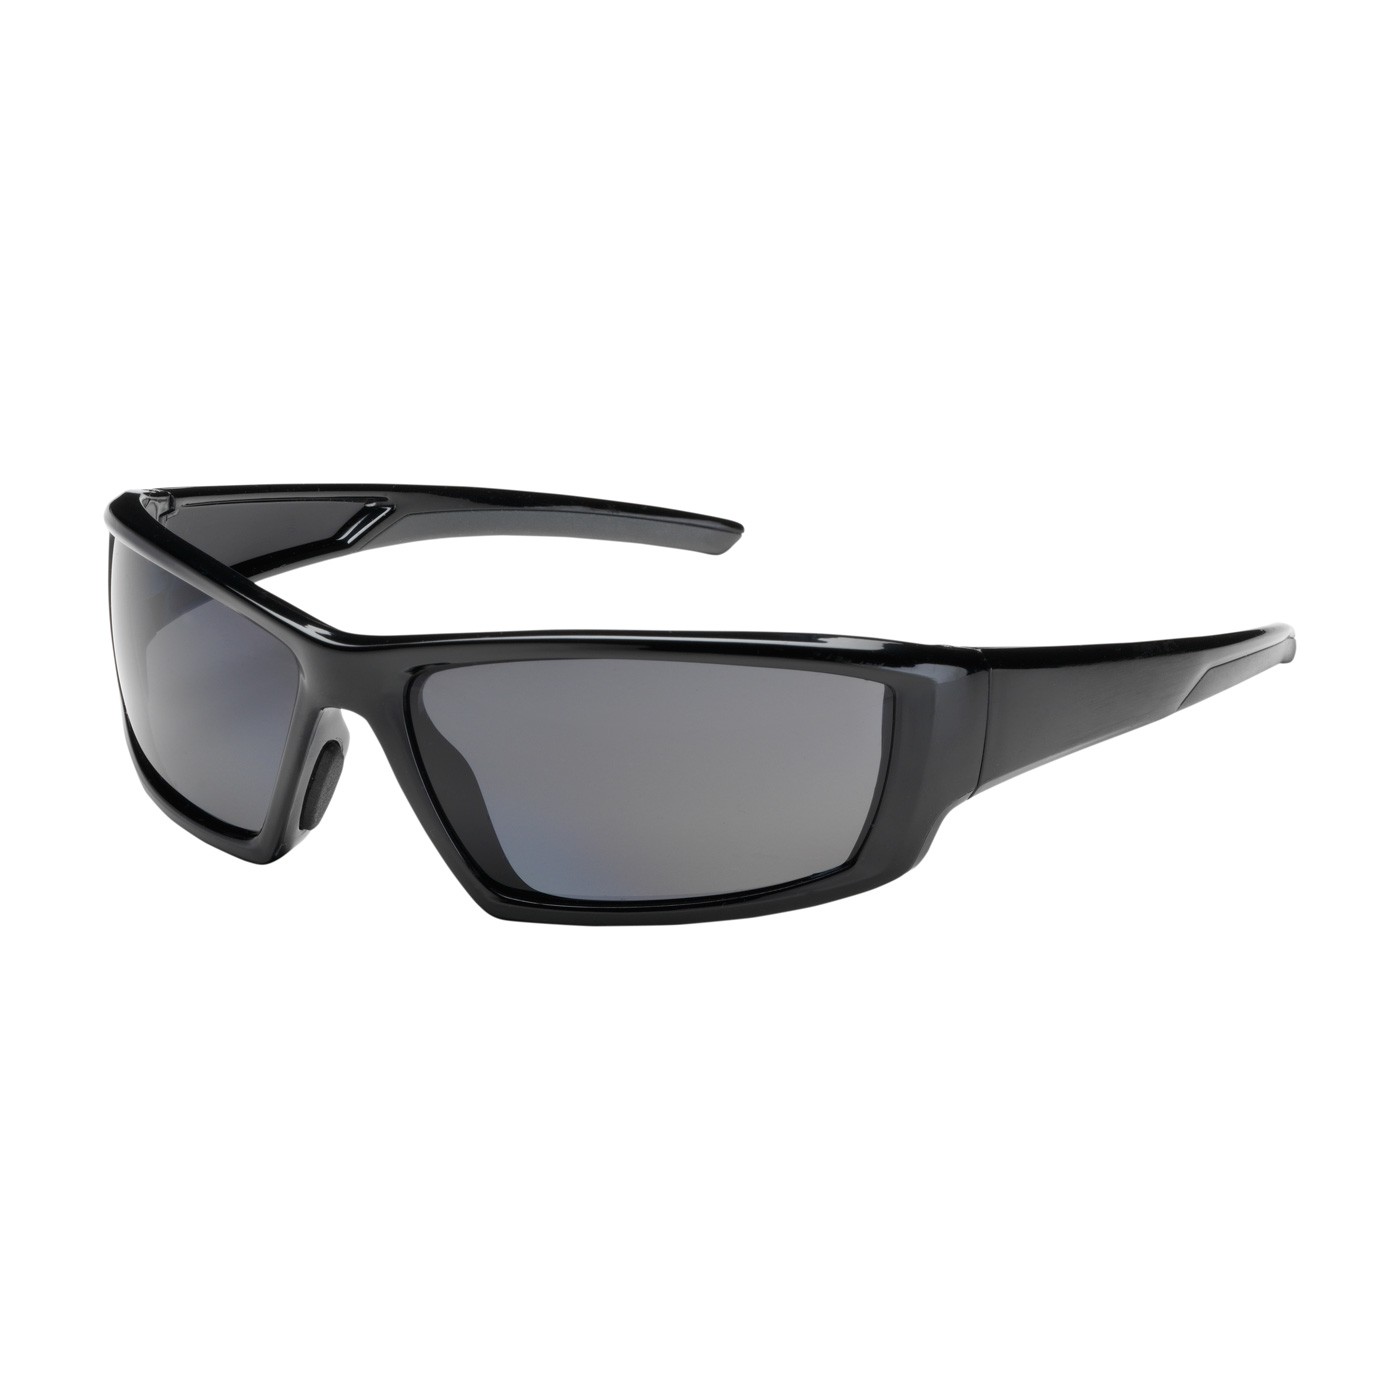 Sunburst™ Full Frame Safety Glasses with Black Frame, Gray Lens and Anti-Scratch / Anti-Fog Coating  (#250-47-0021)